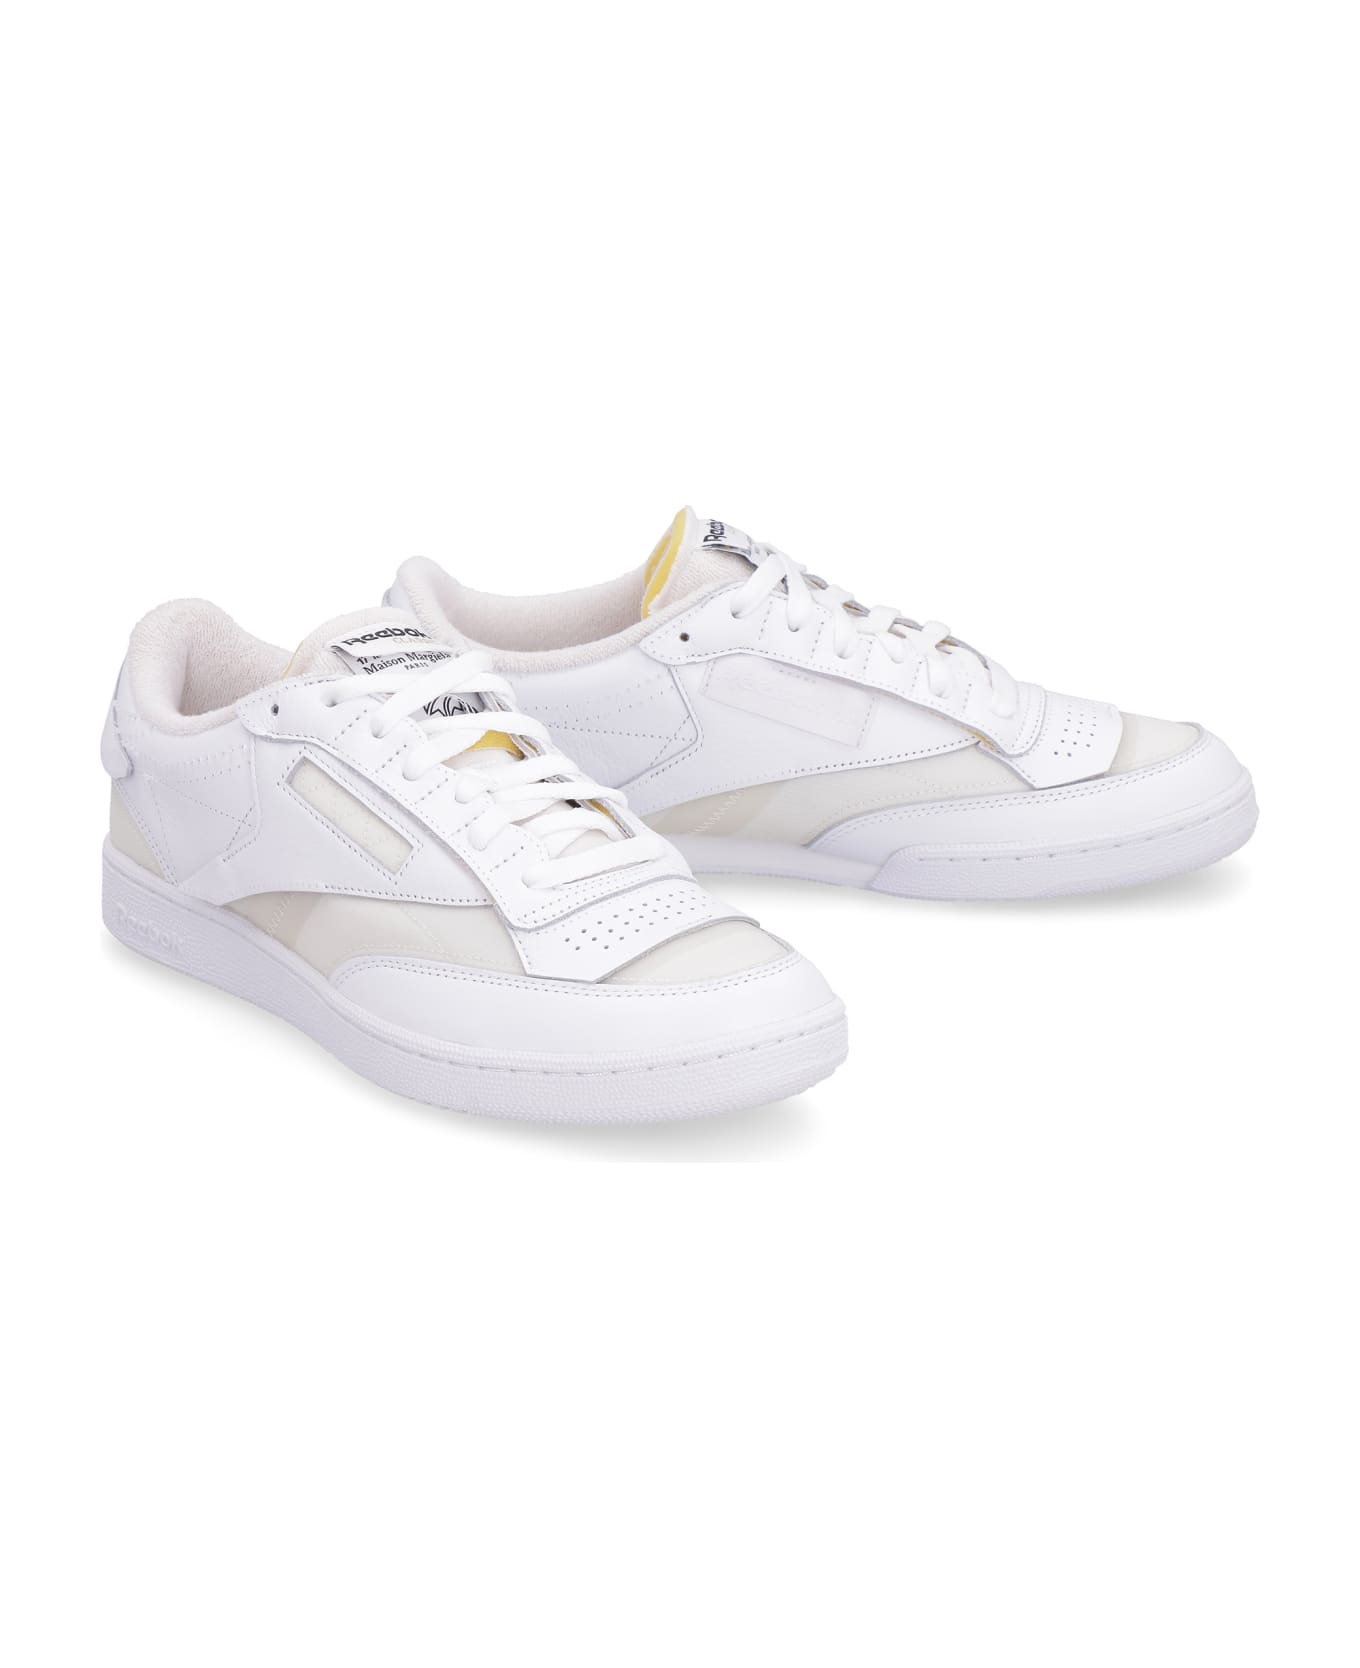 Maison Margiela Mm X Reebok - Leather Low-top Sneakers - White